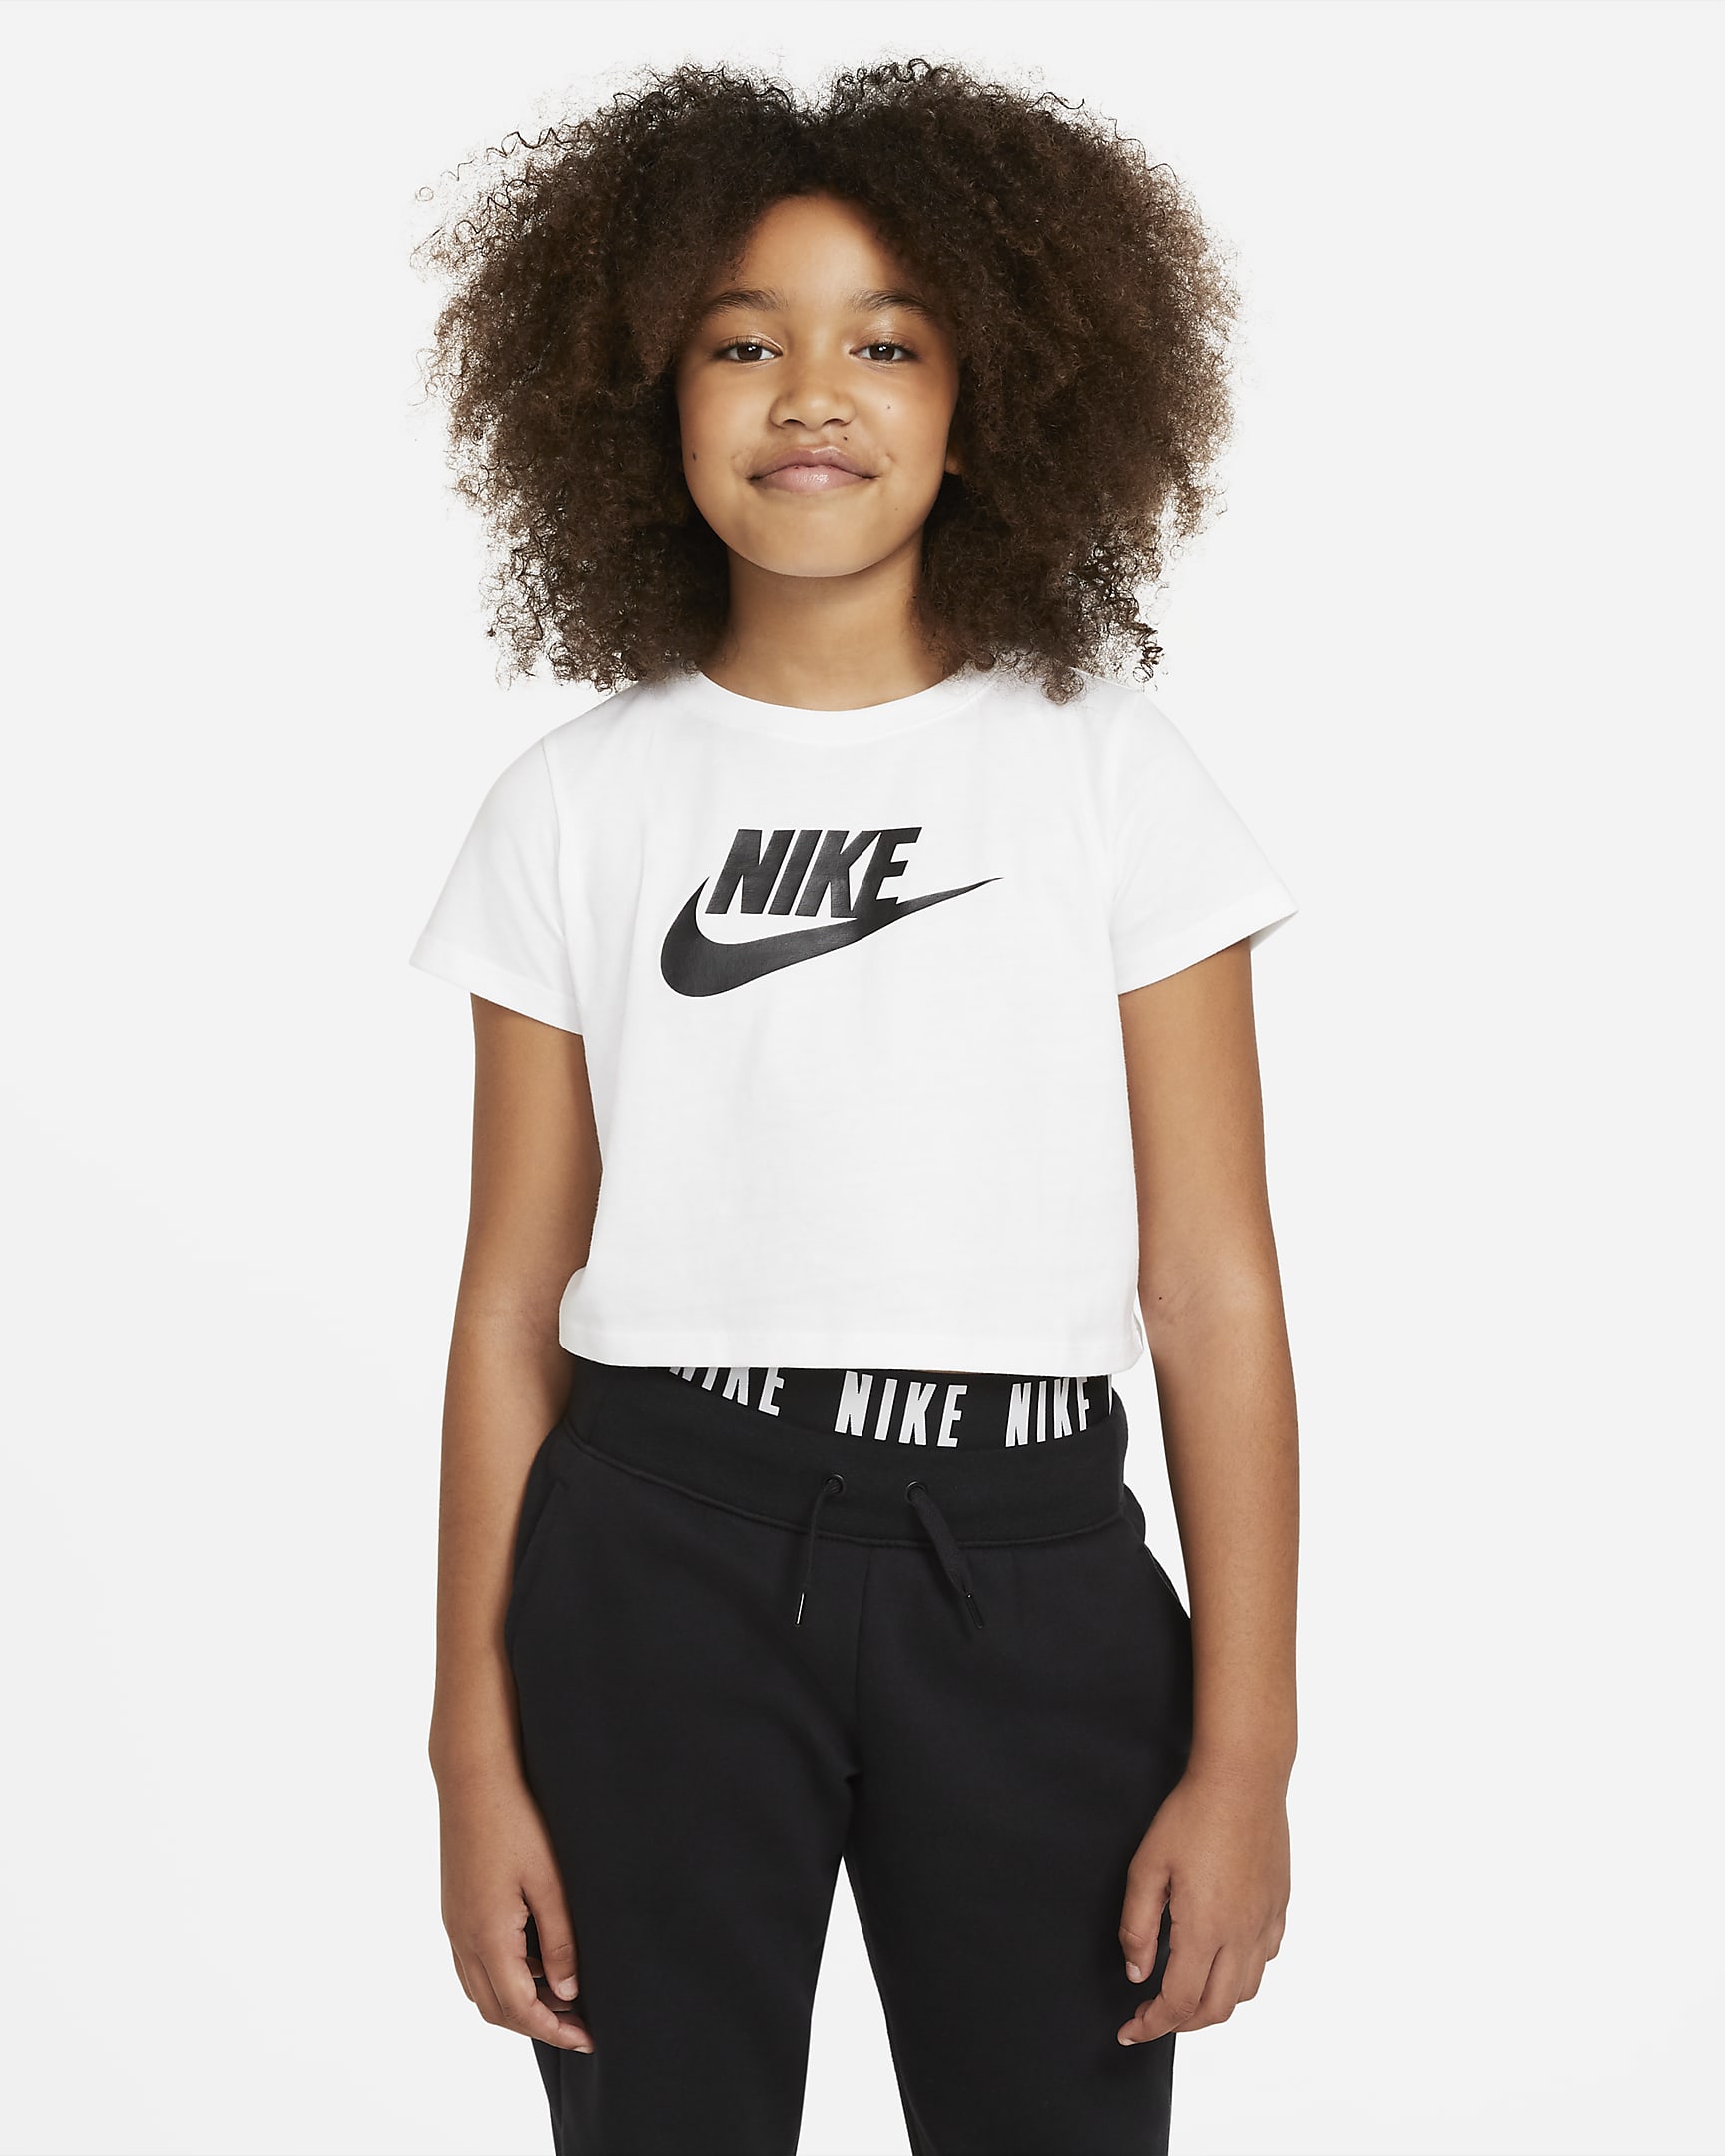 T-shirt ridotta Nike Sportswear - Ragazza - Bianco/Nero/Nero